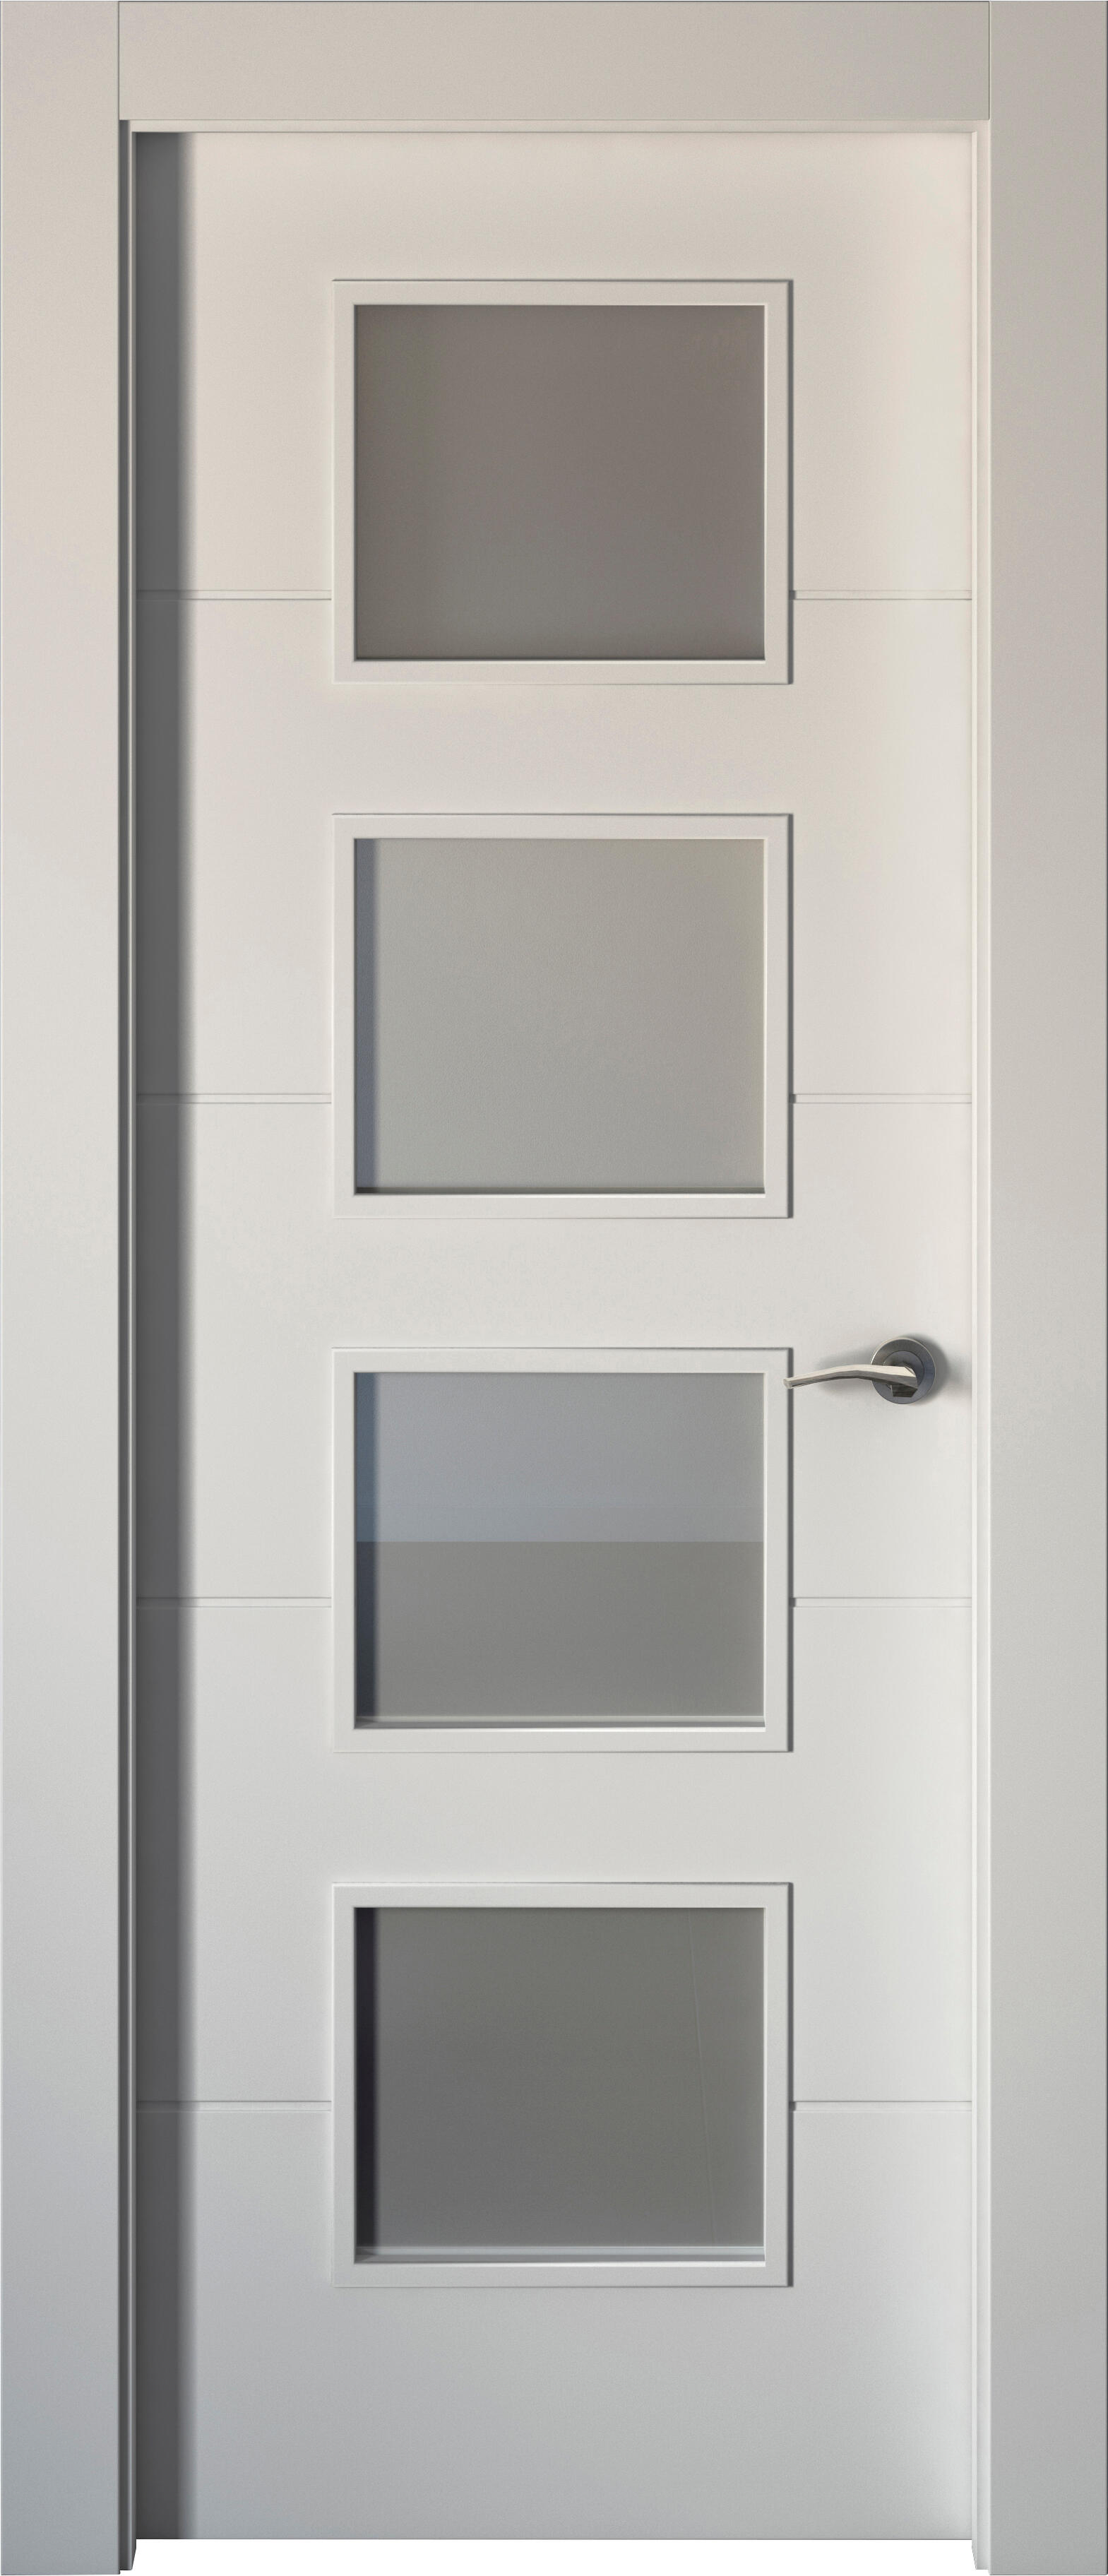 Puerta holanda blanco apertura izquierda con cristal 82.5cm